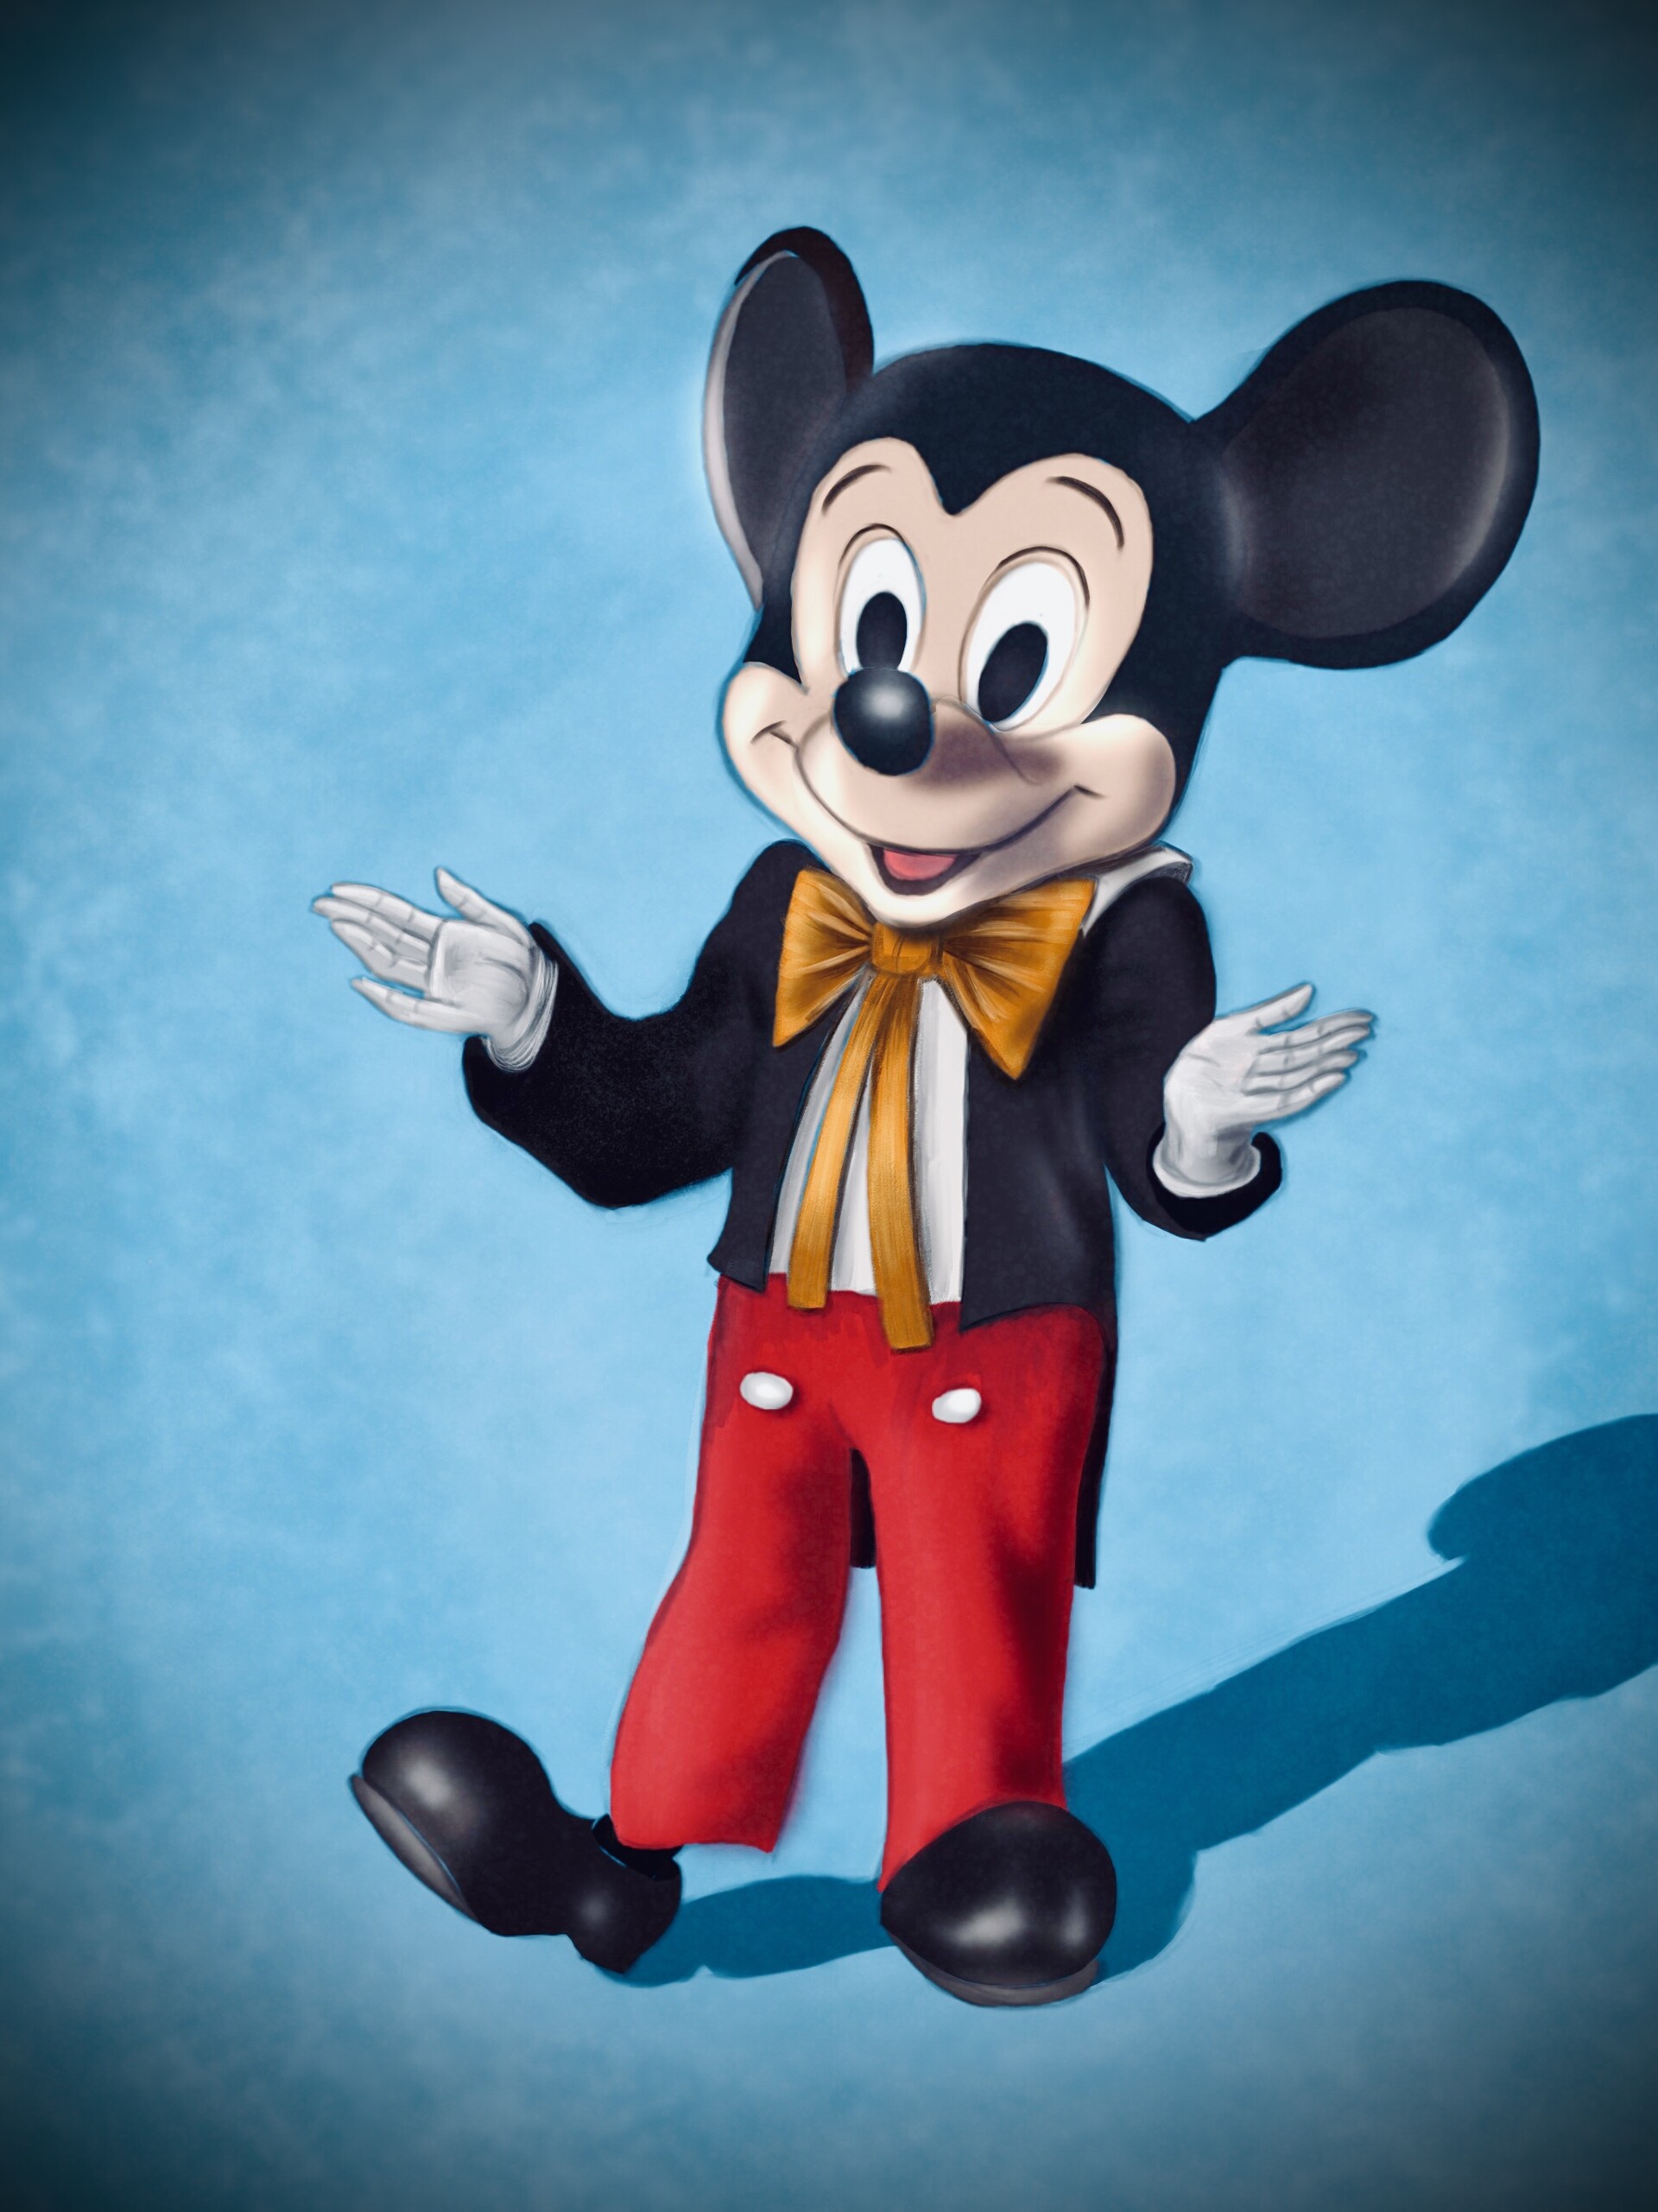 ArtStation - Costume Mickey Mouse